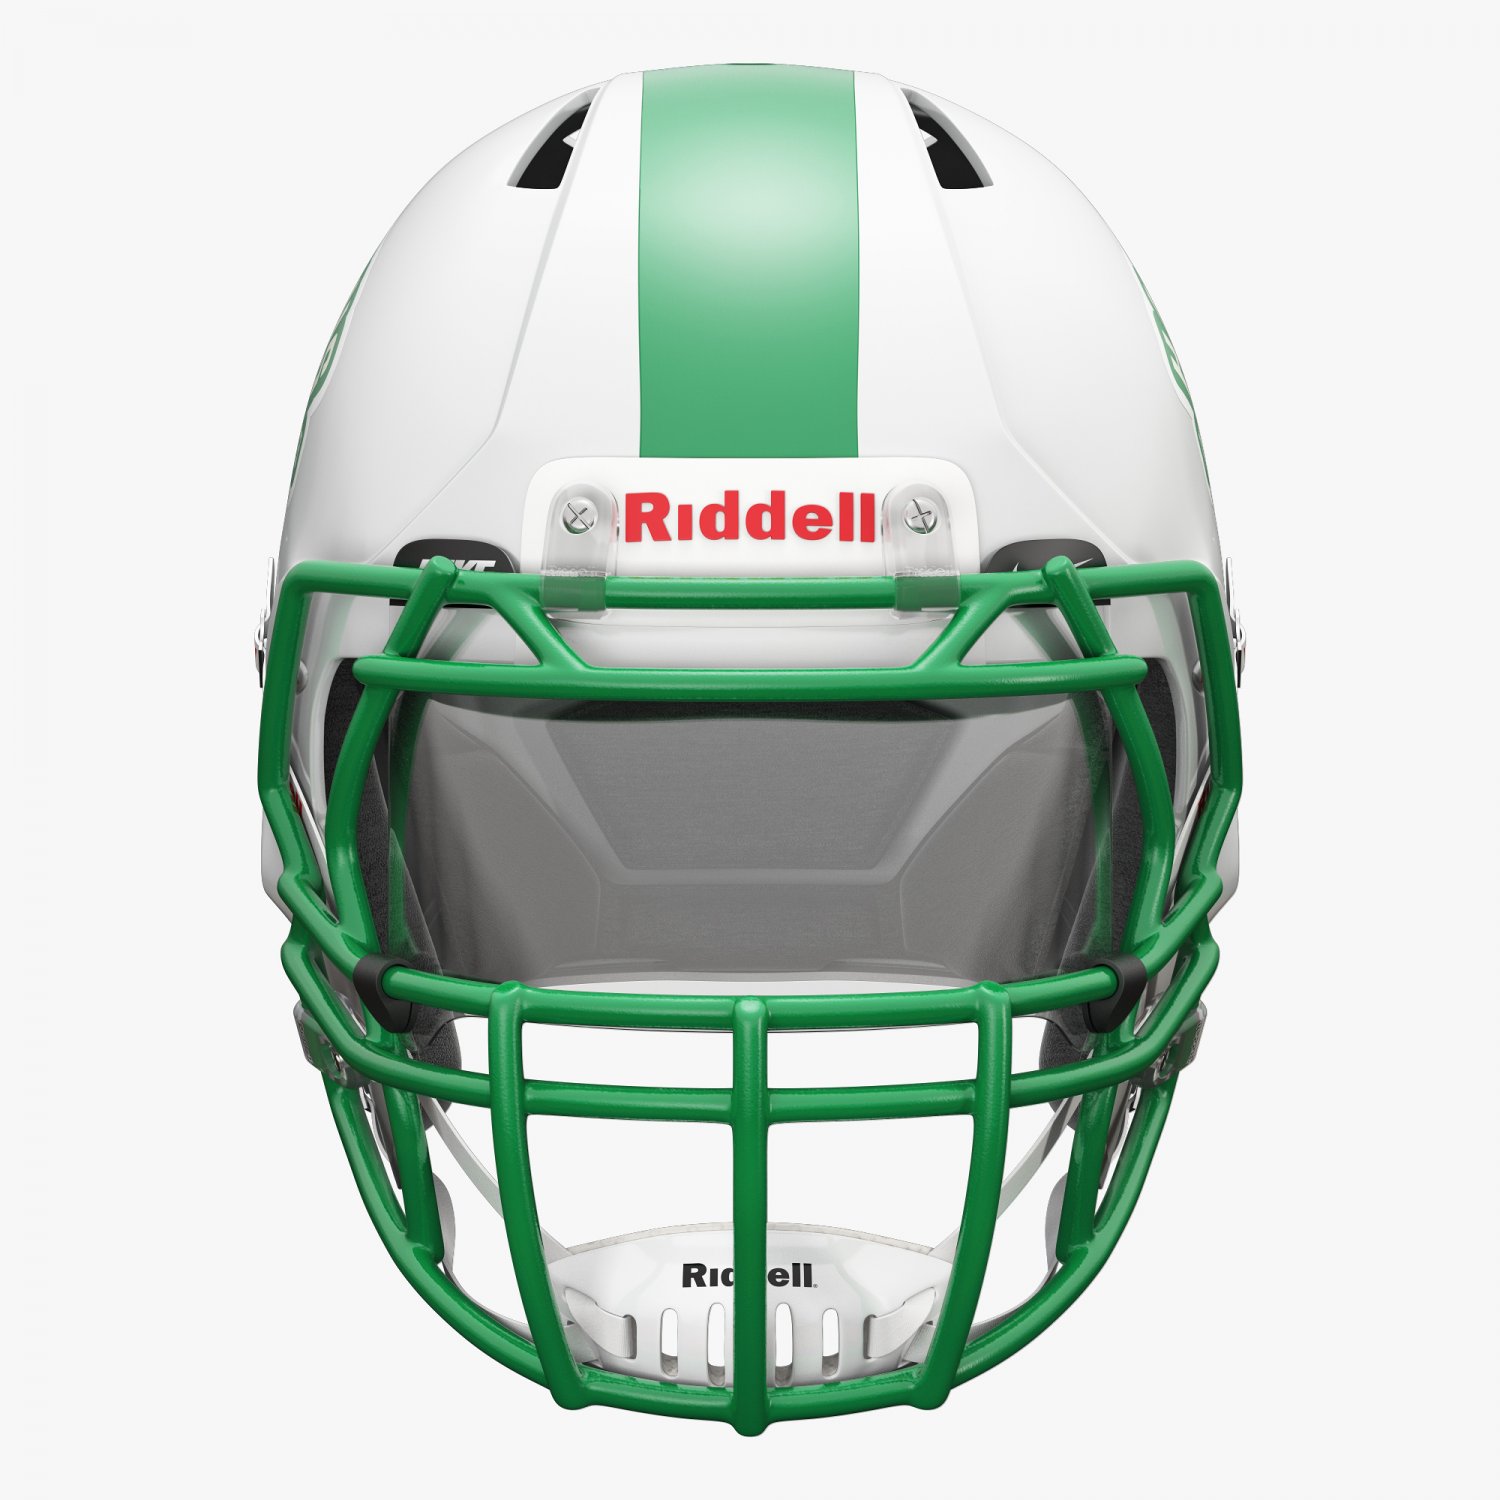 Riddell SpeedFlex Adult Football Helmet With Facemask - 3D Model